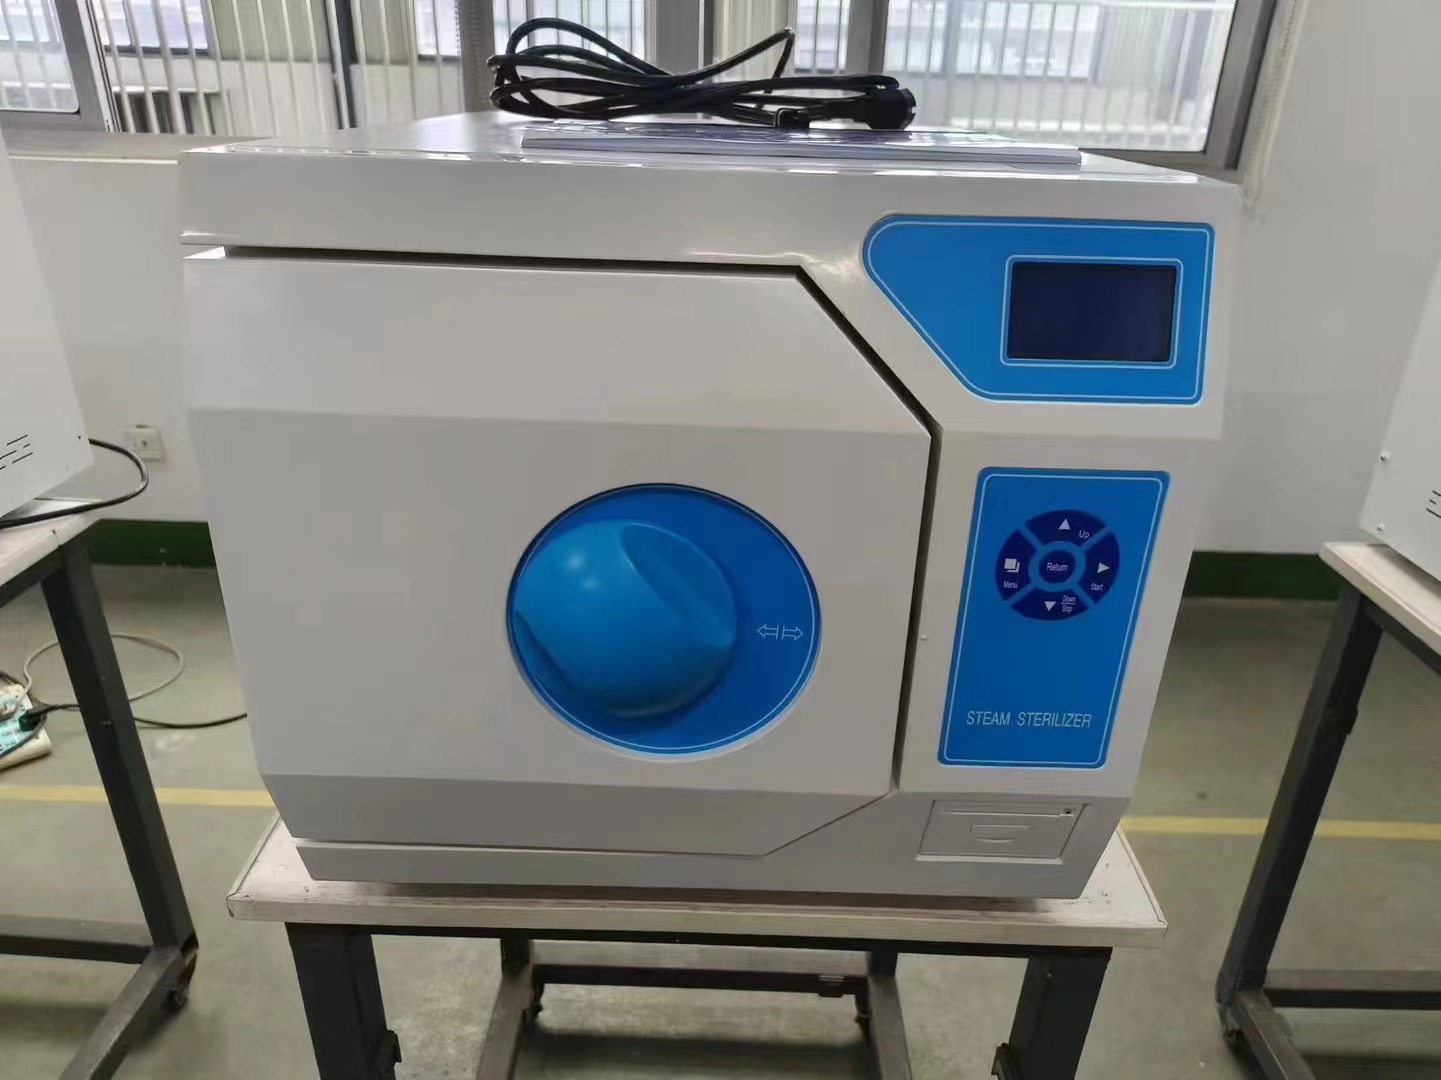 The desktop steam sterilization autoclave is being shipped to Ukraine